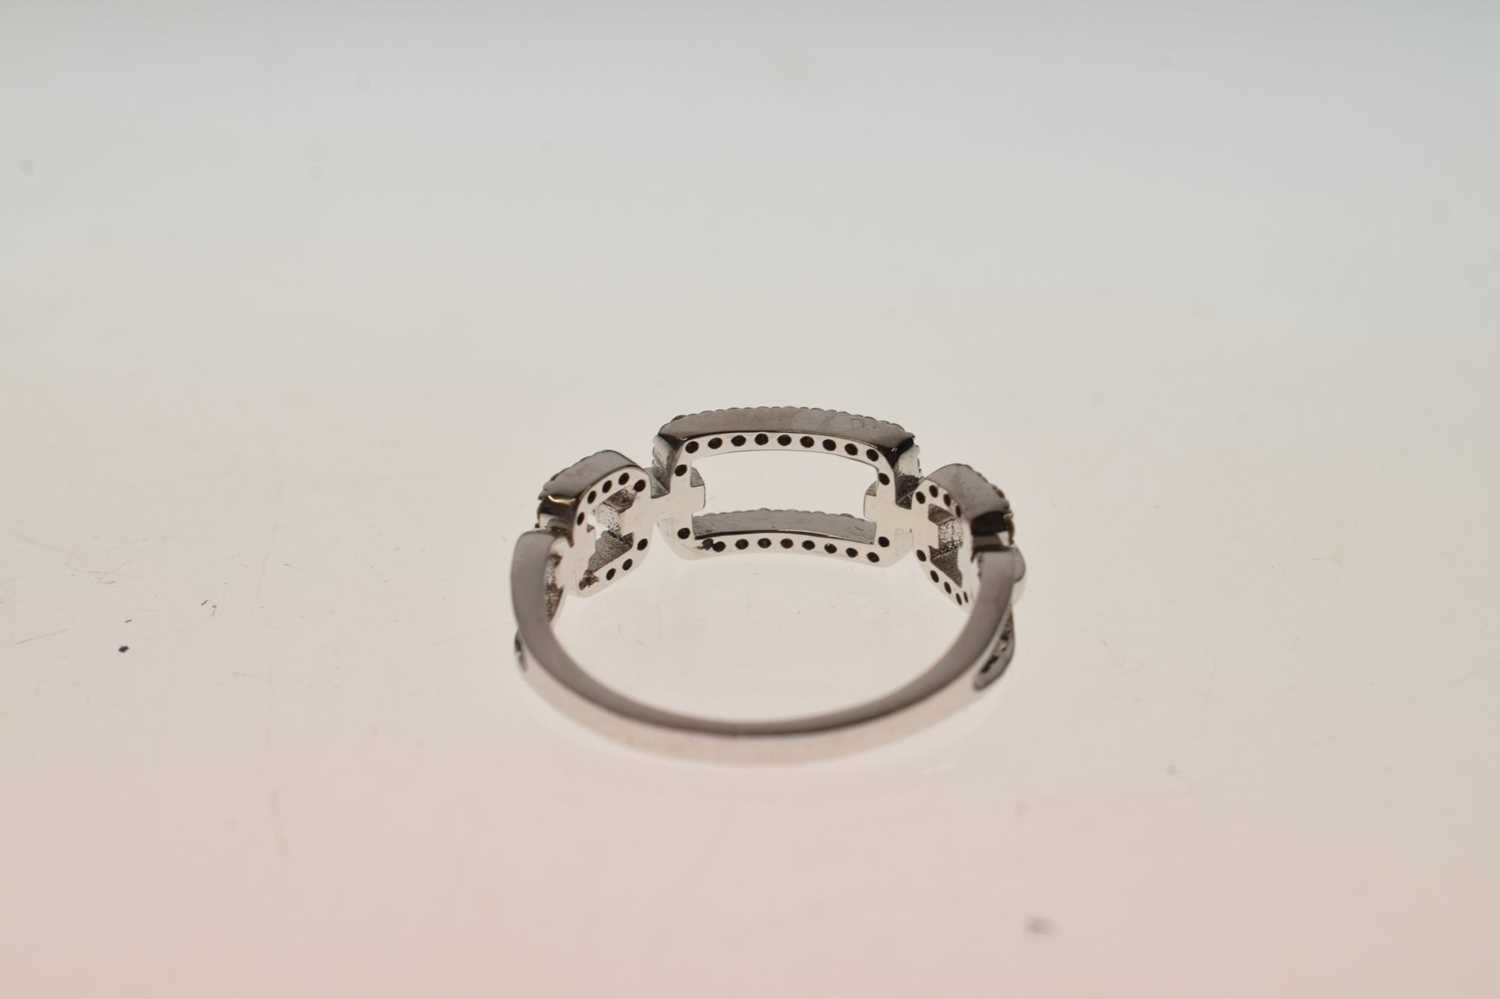 Diamond set dress ring of chain links design - Image 3 of 8